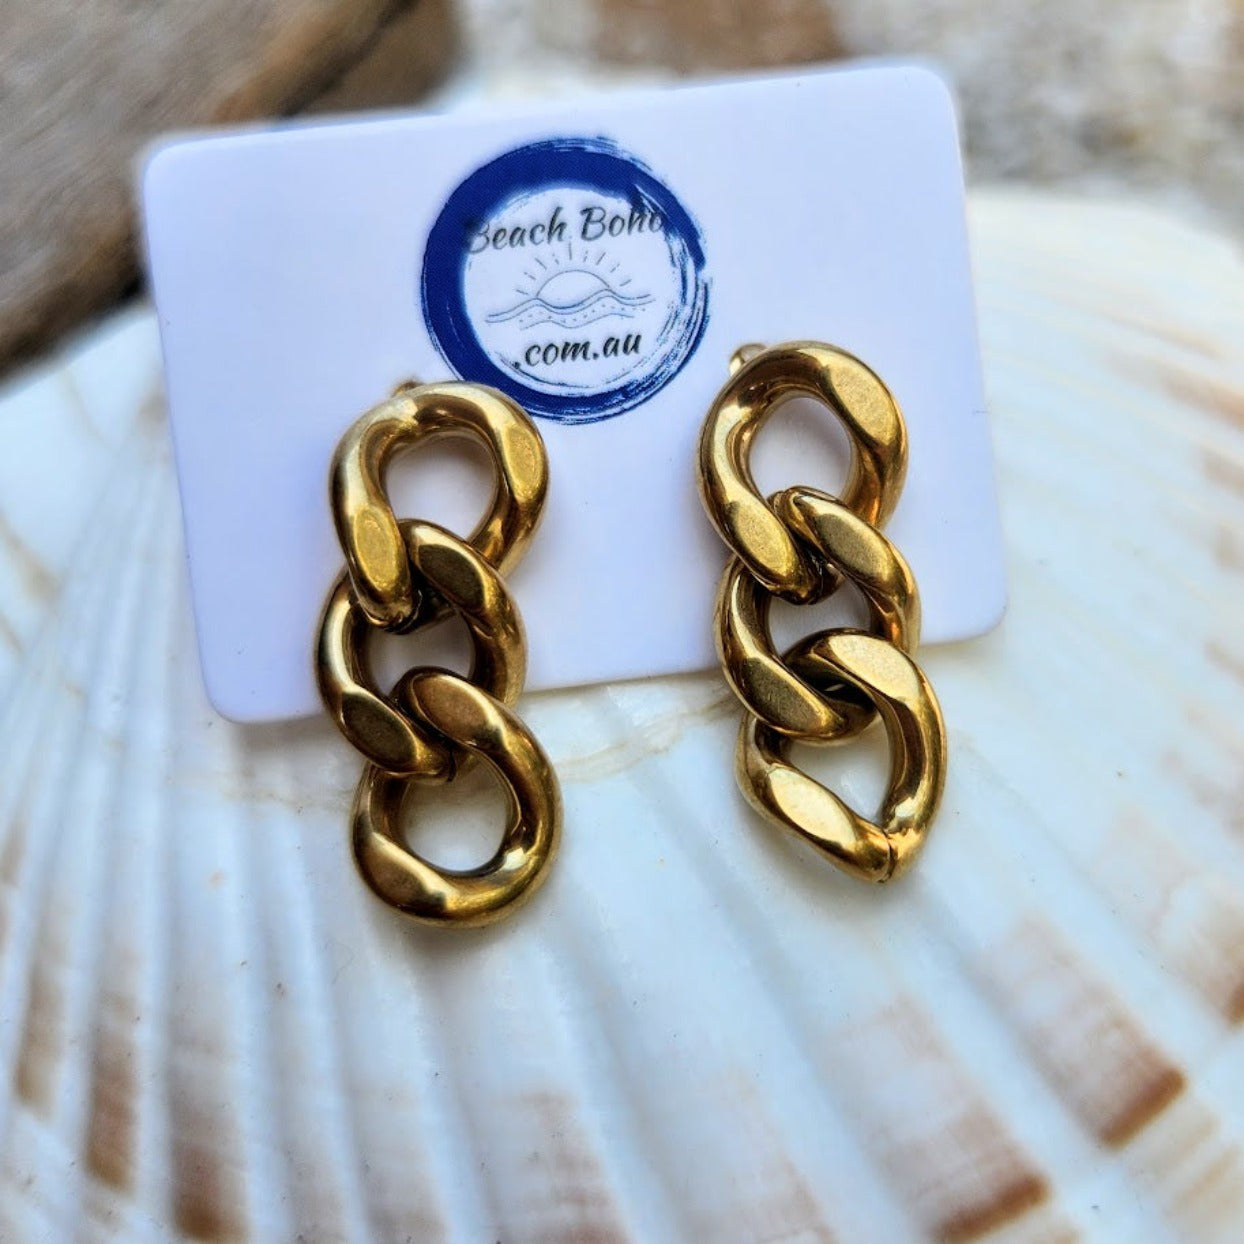 CHEANNE EARRINGS / GOLD  WATERPROOF EARRINGS - Premium earrings from www.beachboho.com.au - Just $45! Shop now at www.beachboho.com.au